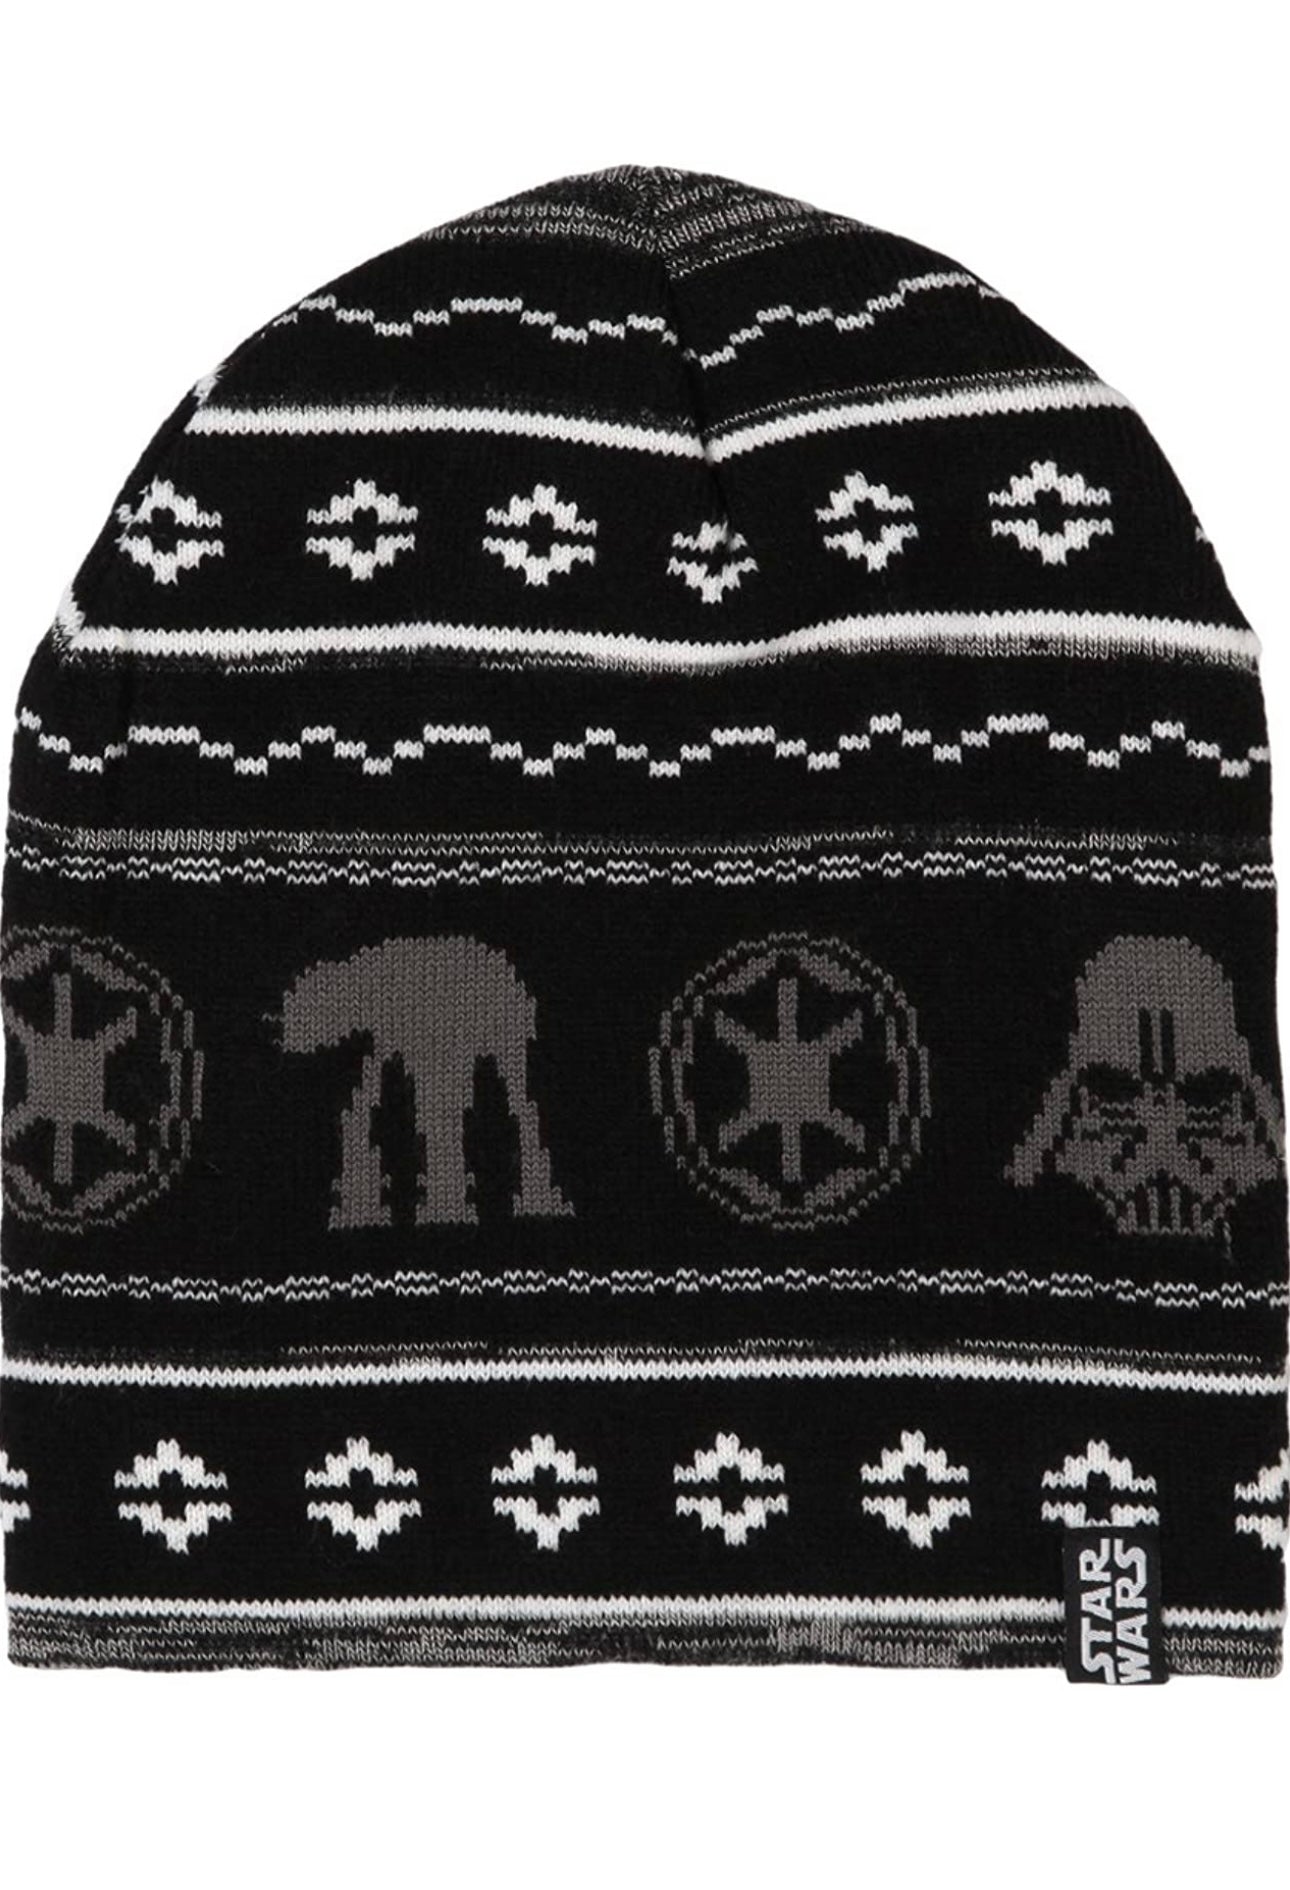 Star Wars Knit Beanie